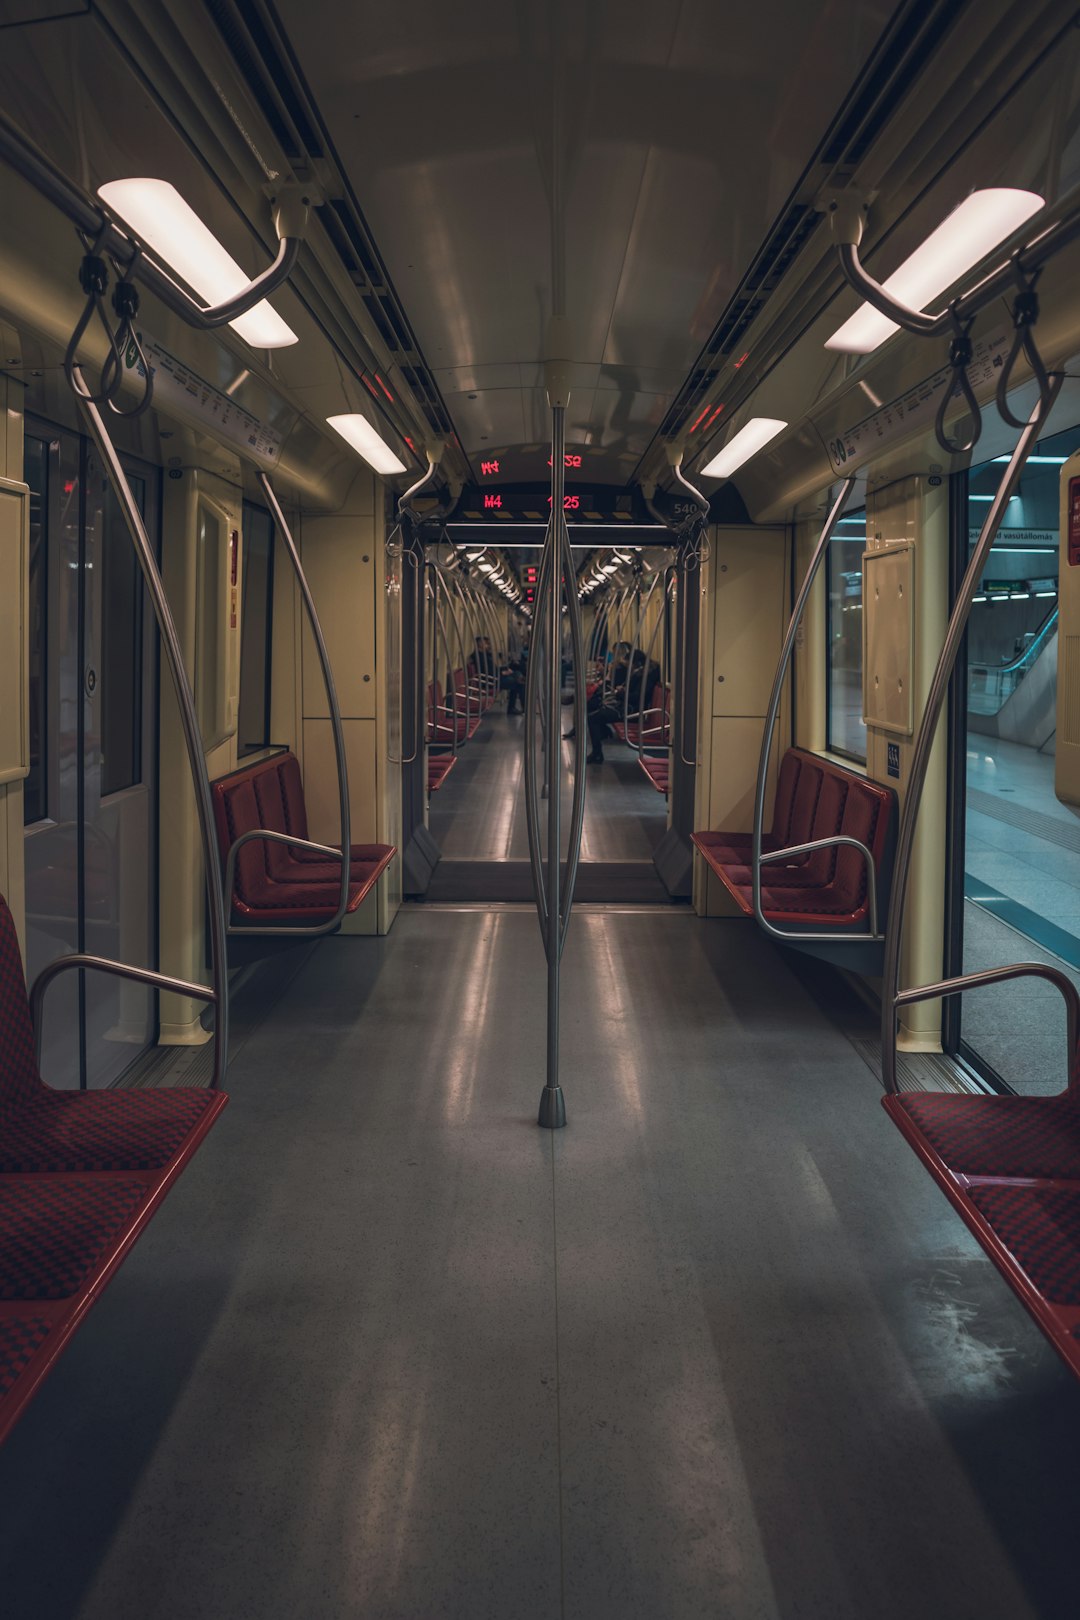 gray and white train interior view